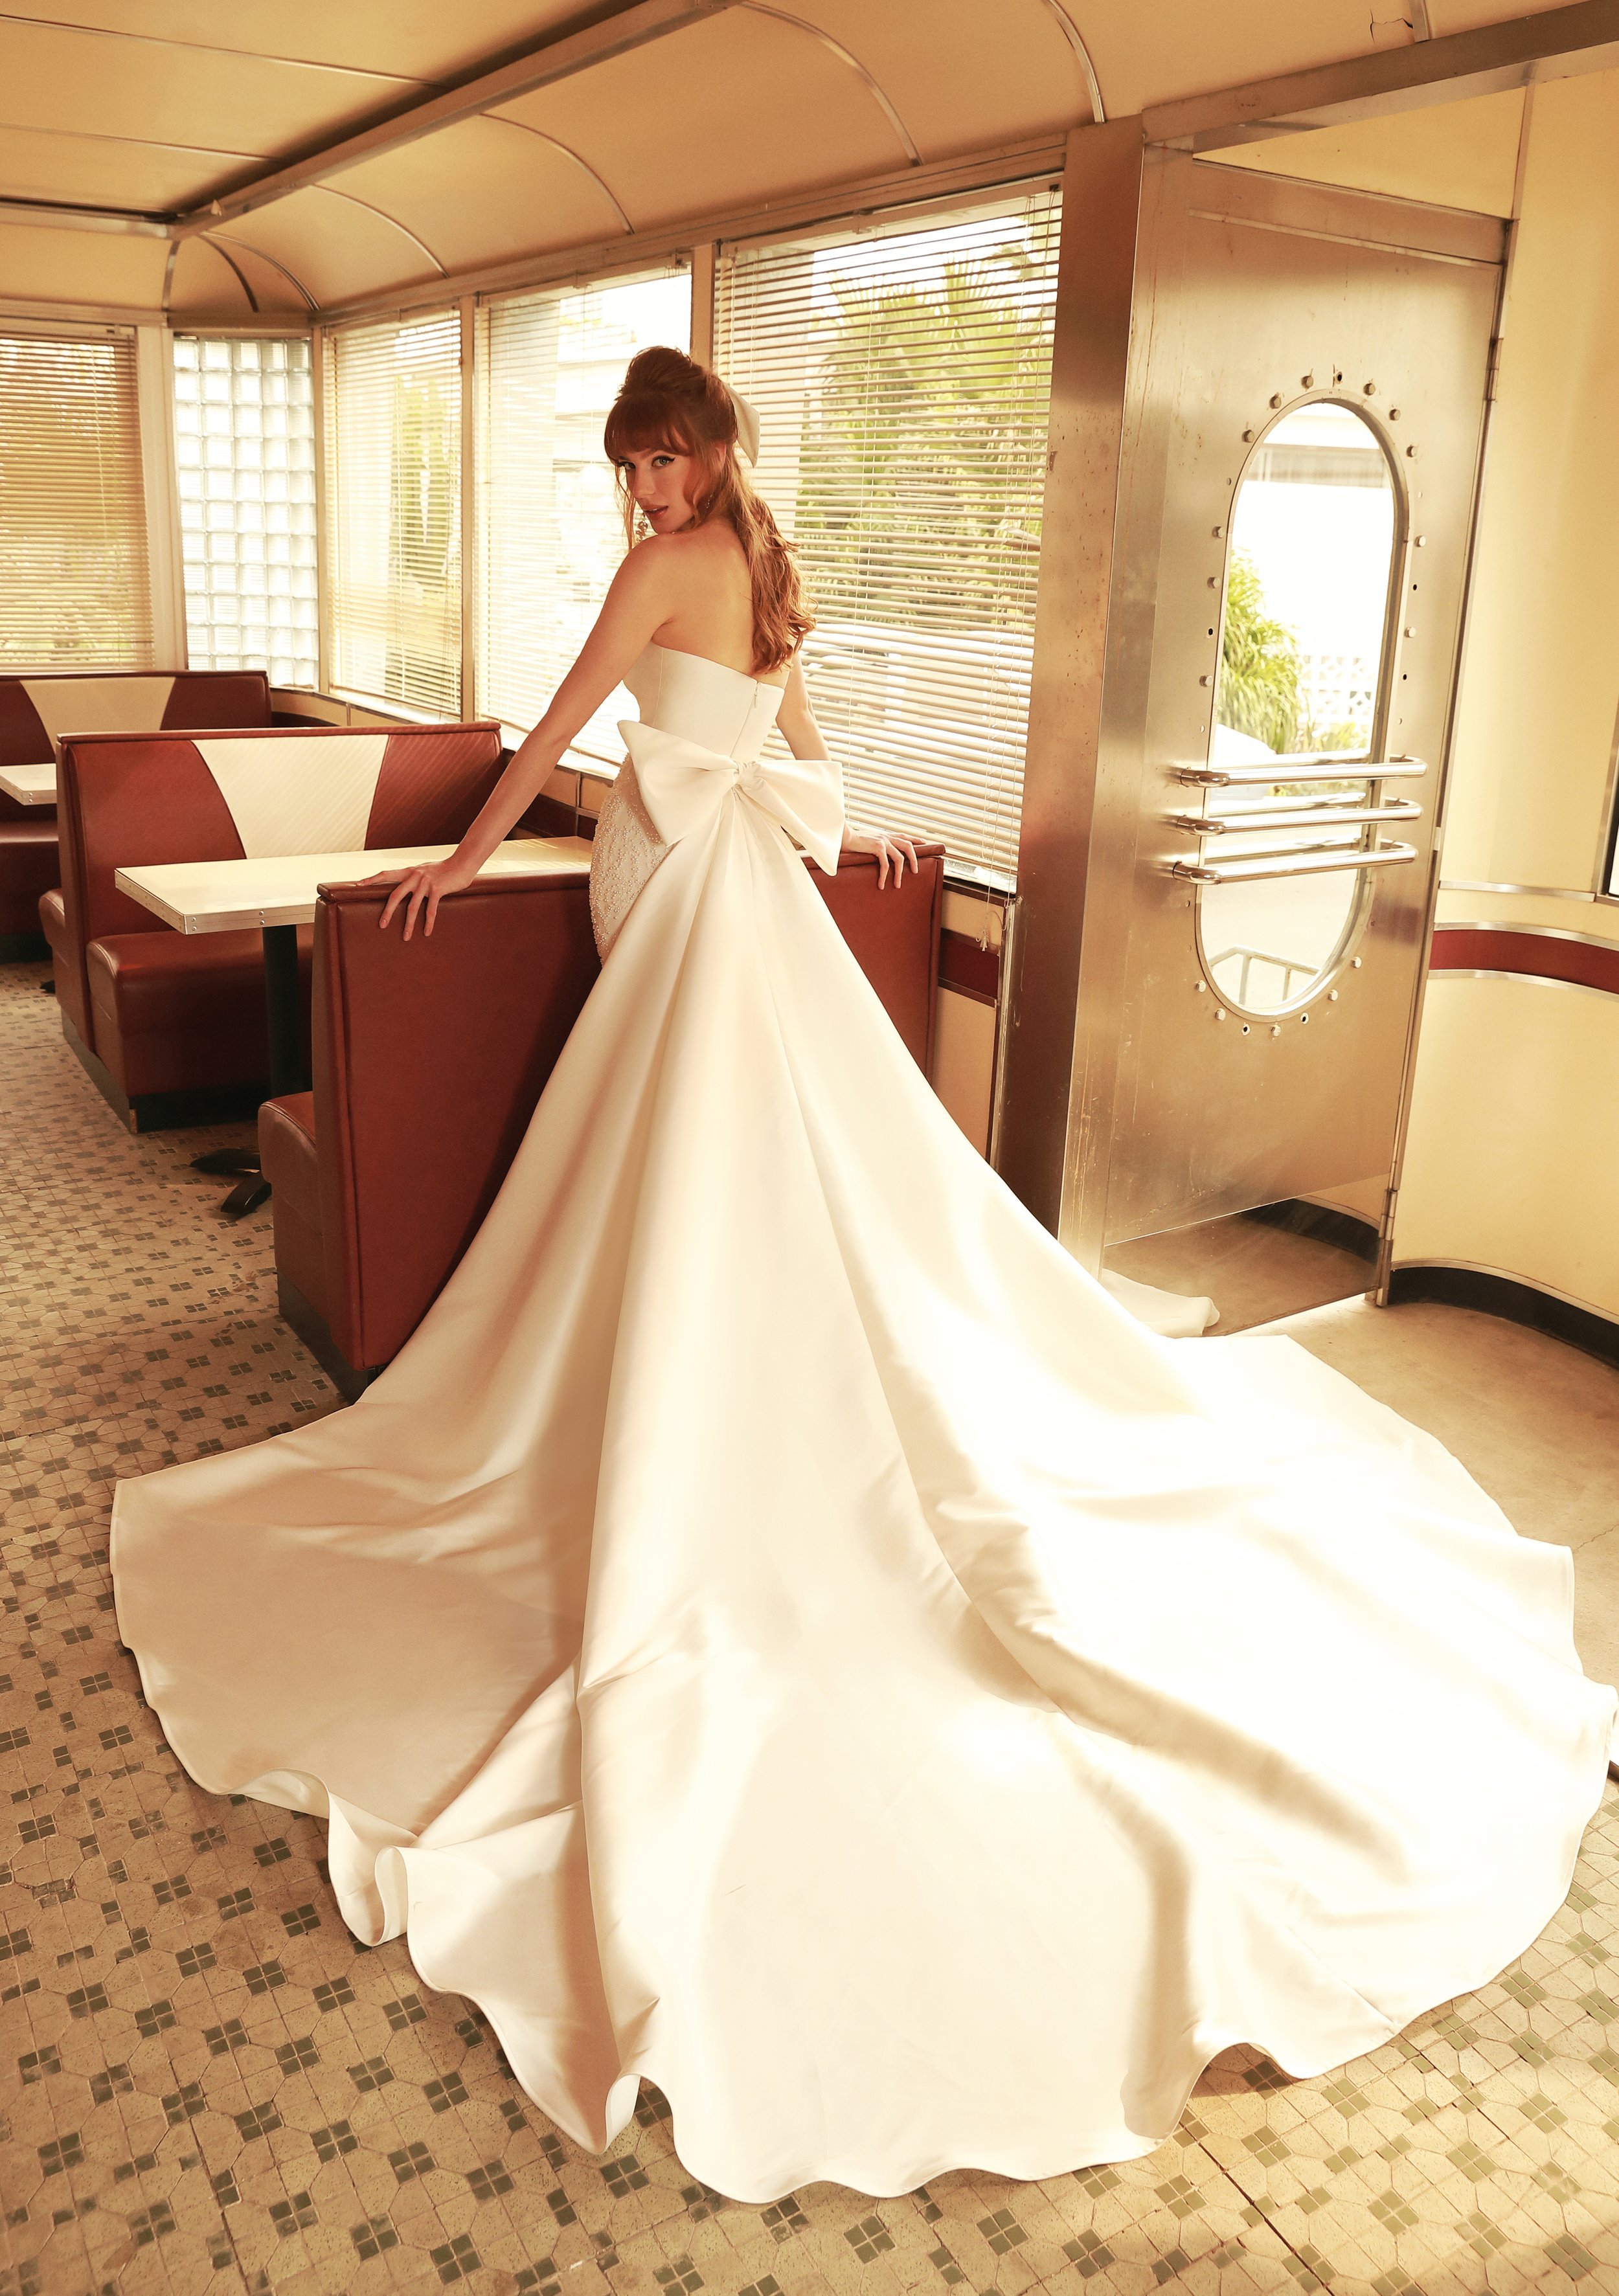 Blanc-de-blanc-bridal-boutique-pittsburgh-dress-wedding-gown-dany-tabet-etta.jpeg